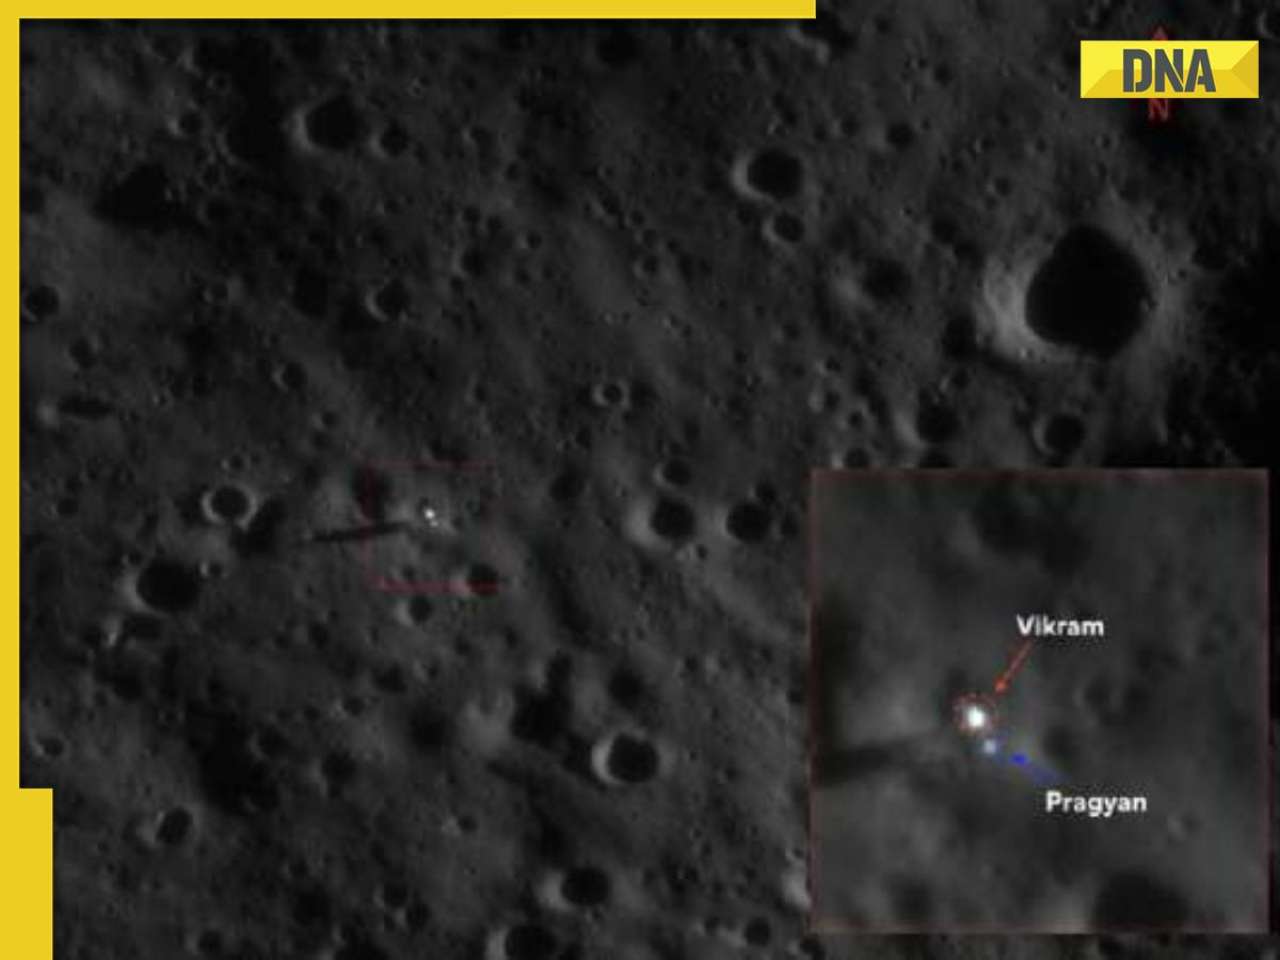 Photos of ISRO's Vikram and Pragyan resting on moon's surface go viral